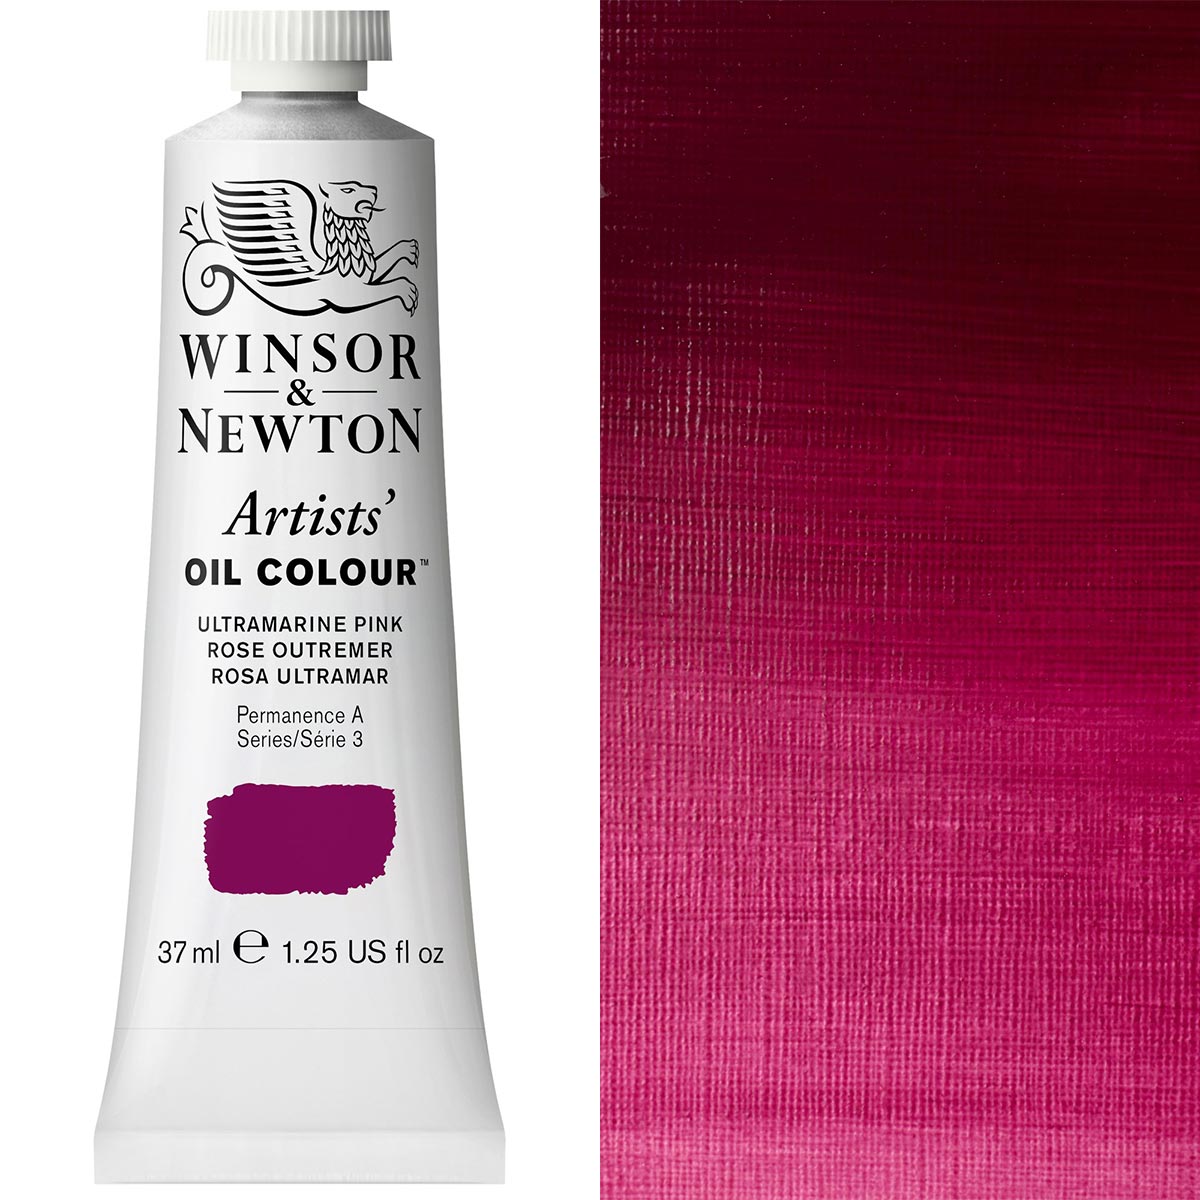 Winsor and Newton - Artists' Oil Colour - 37ml - Ultramarine Pink S3